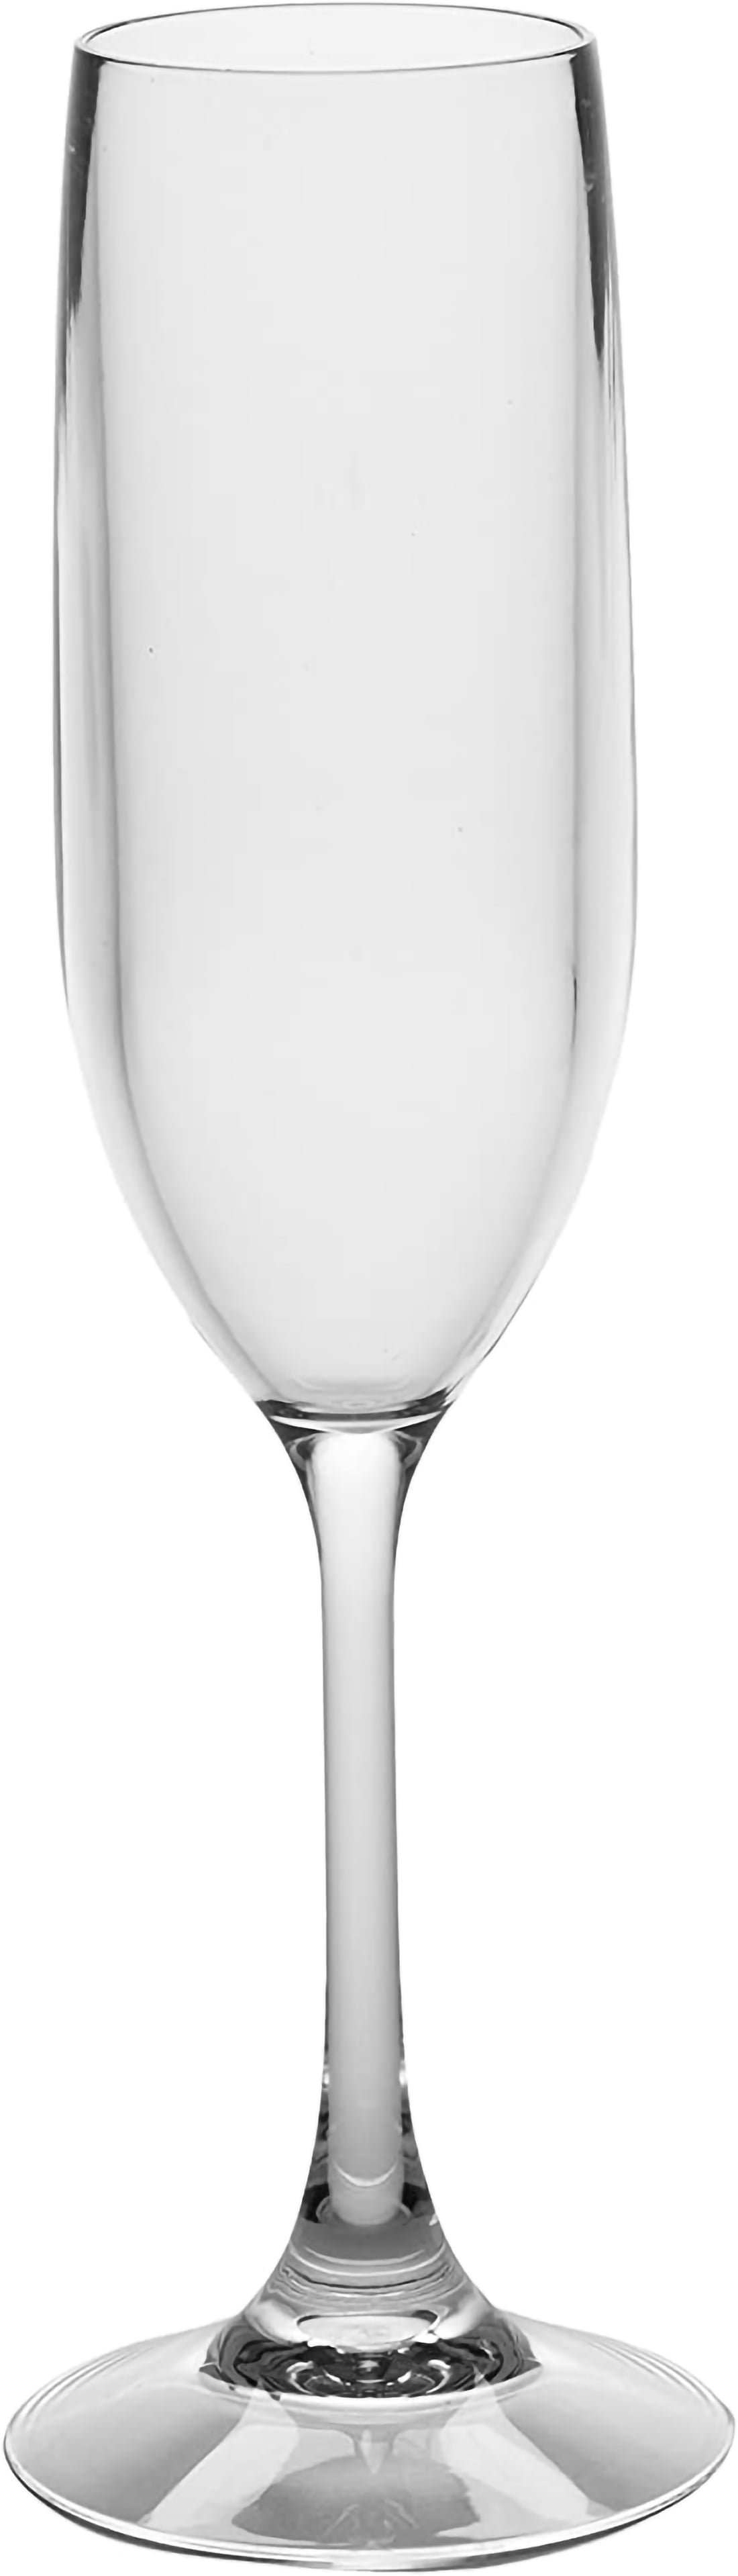 Unbreakable Stemless Champagne Glasses, 12oz - 100% Tritan - Shatterproof,  Reusable, Dishwasher Safe Champagne Flutes (Set of 8) - Indoor Outdoor  Drinkware Great Mother's Day Gift 